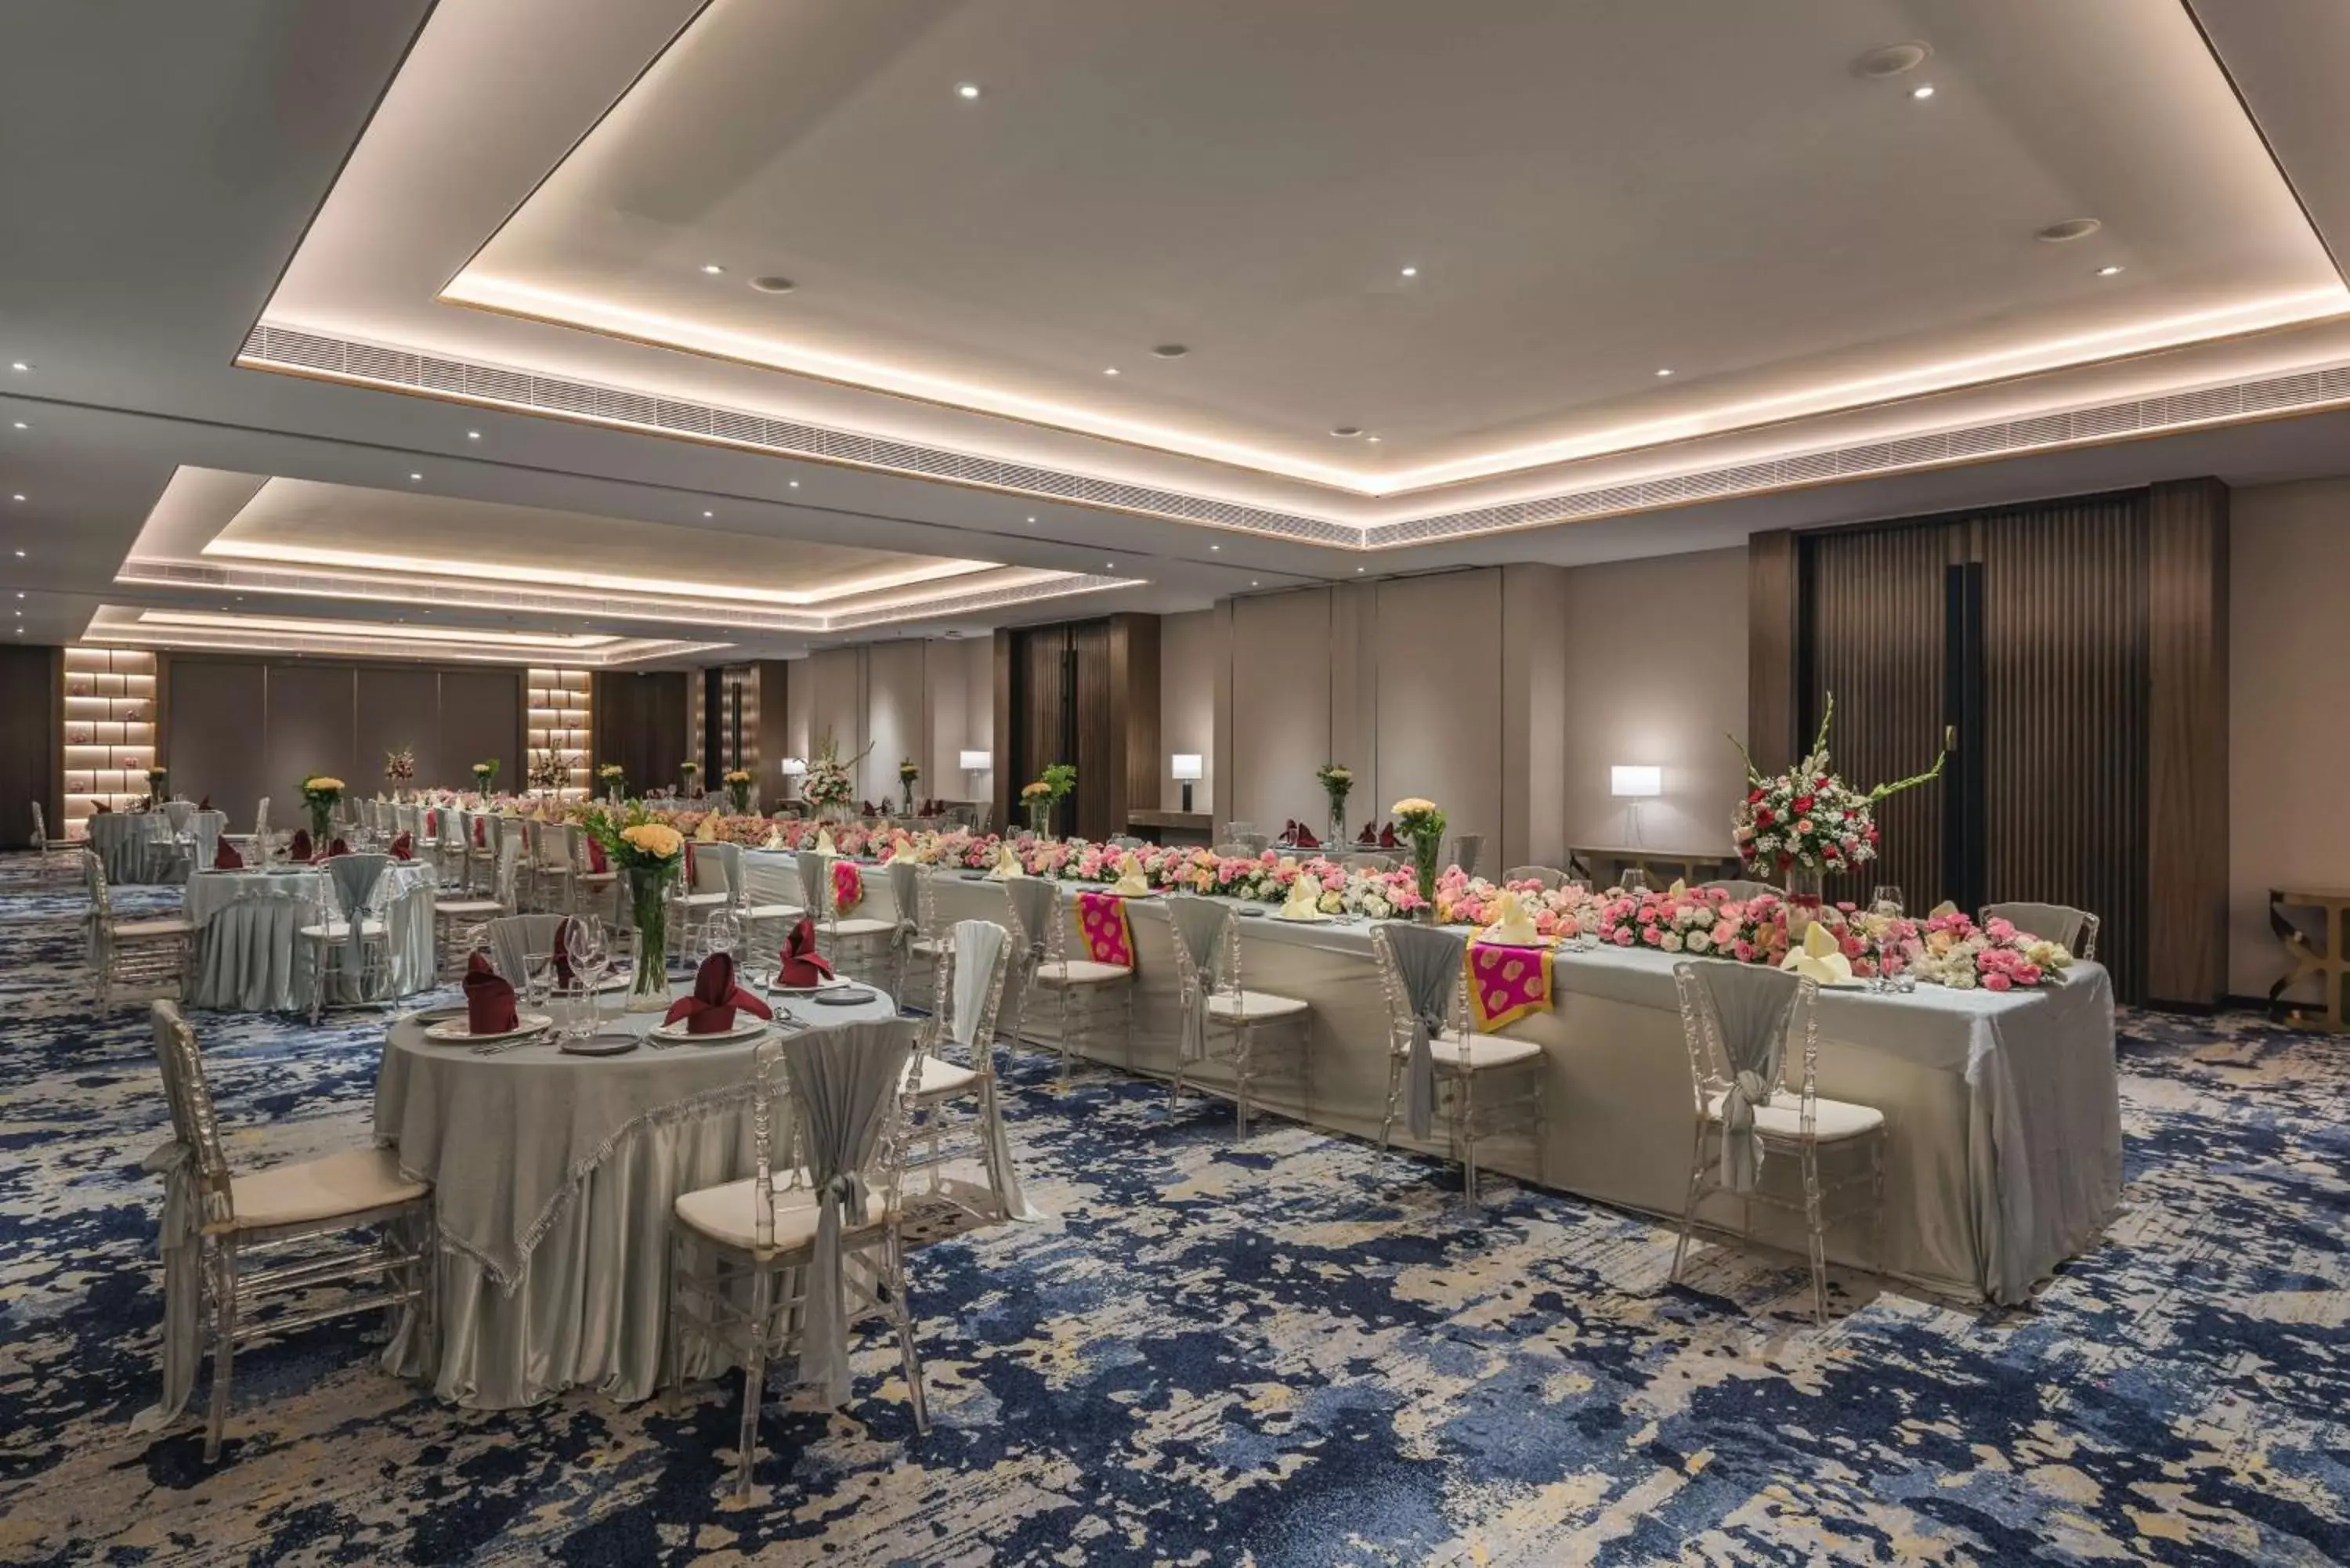 Banquet/Function facilities, Banquet Facilities in Radisson Blu Hotel & Spa, Nashik